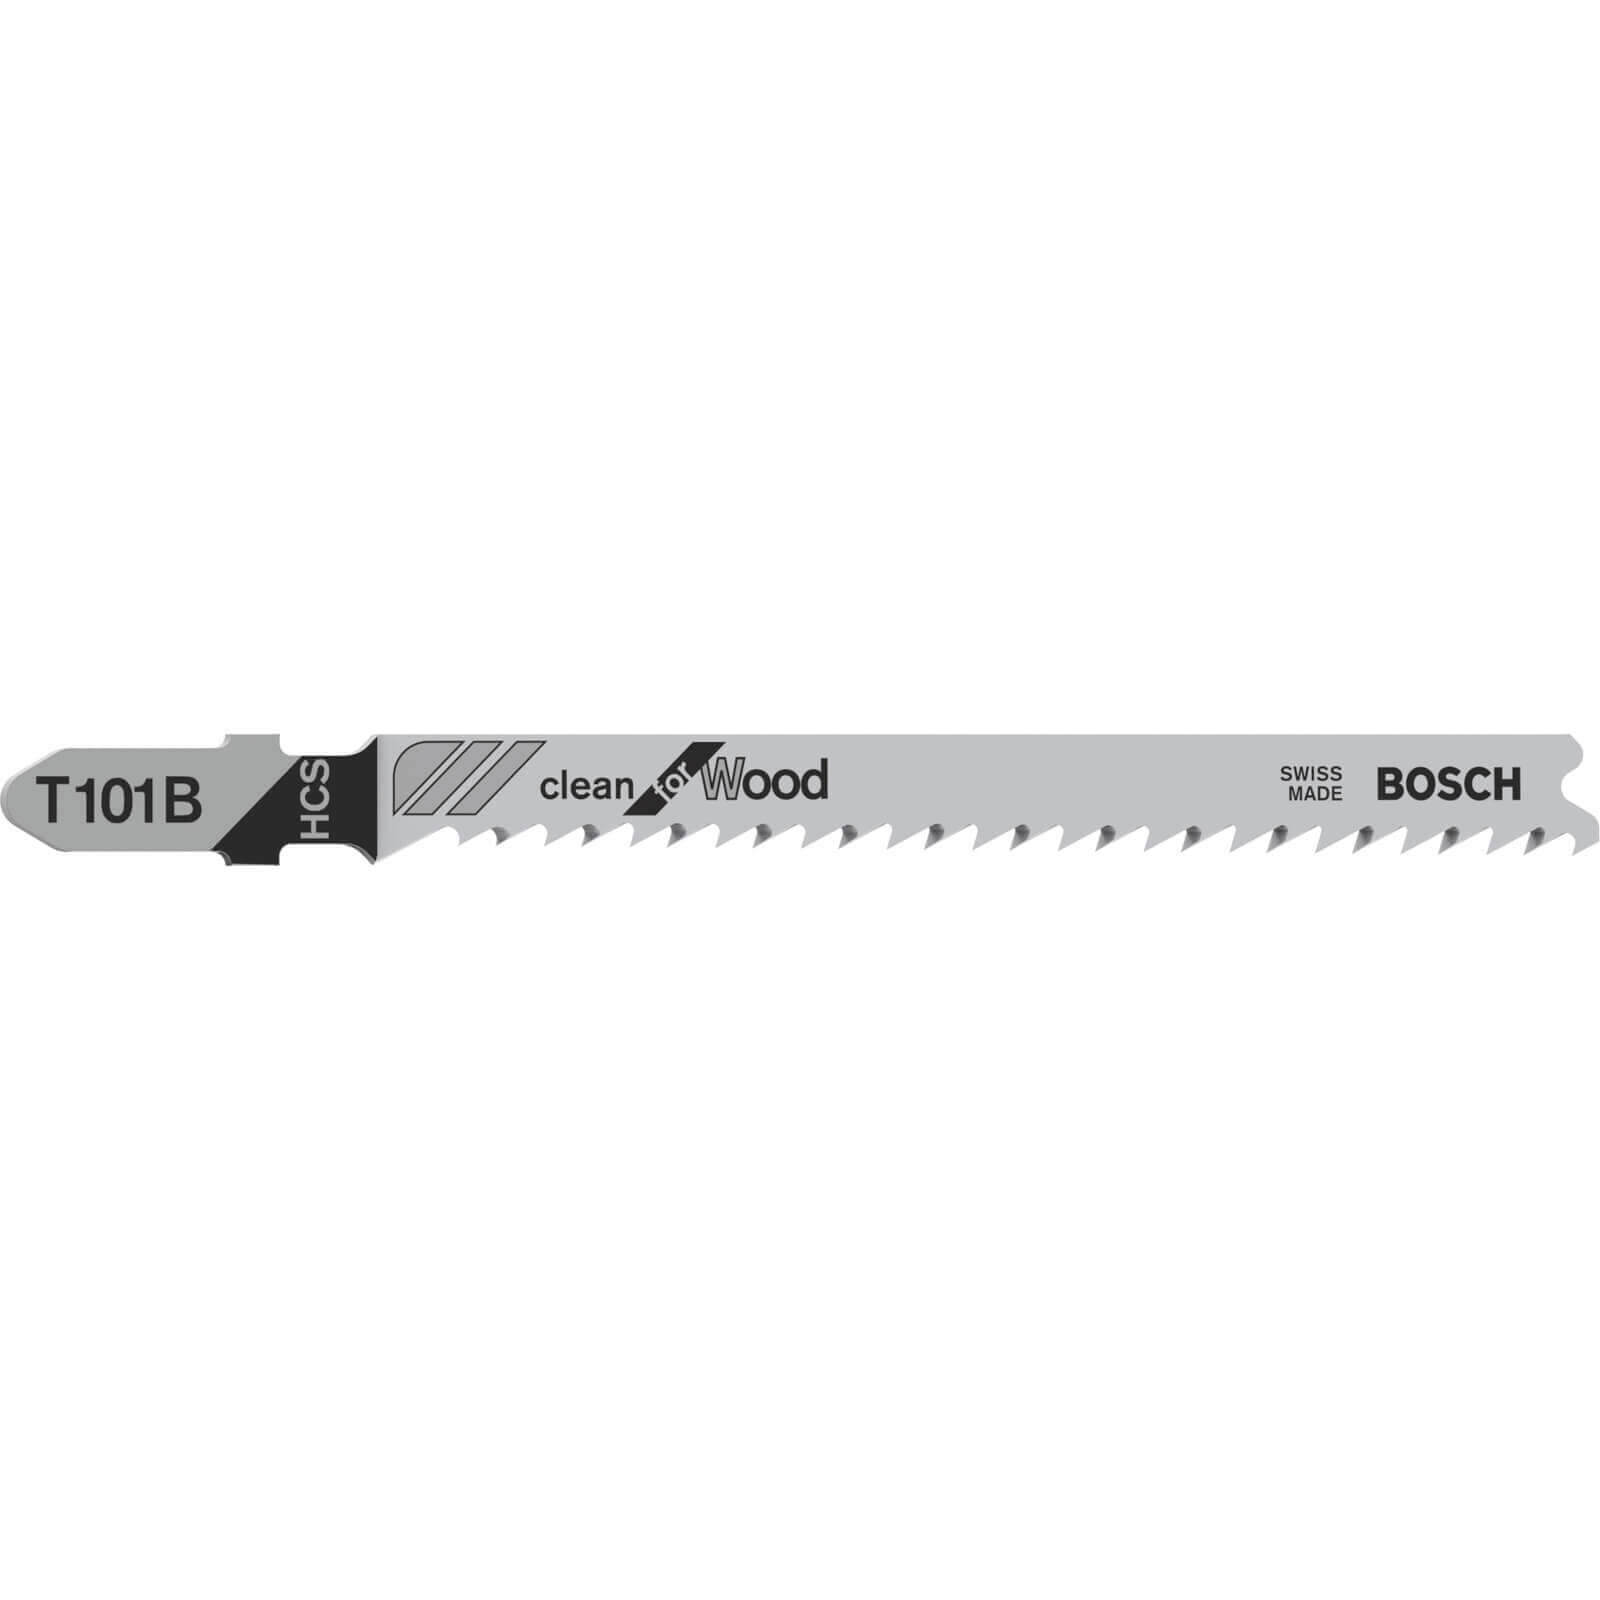 Photo of Bosch T101 B Wood Cutting Jigsaw Blades Pack Of 5